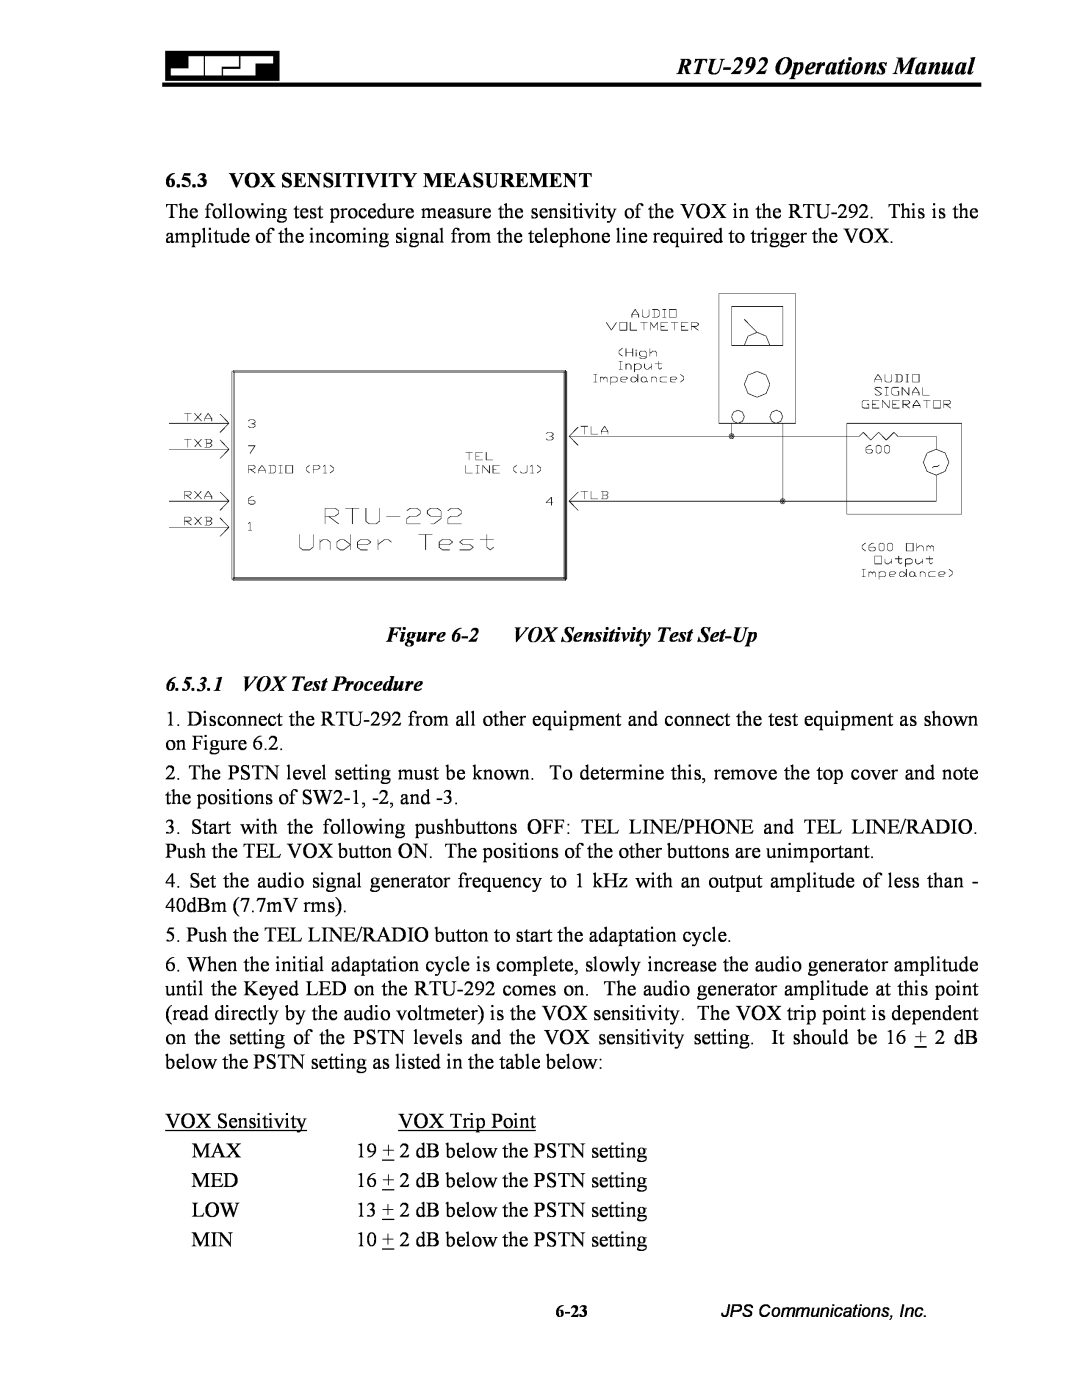 Nortel Networks operation manual RTU-292 Operations Manual, Vox Sensitivity Measurement 